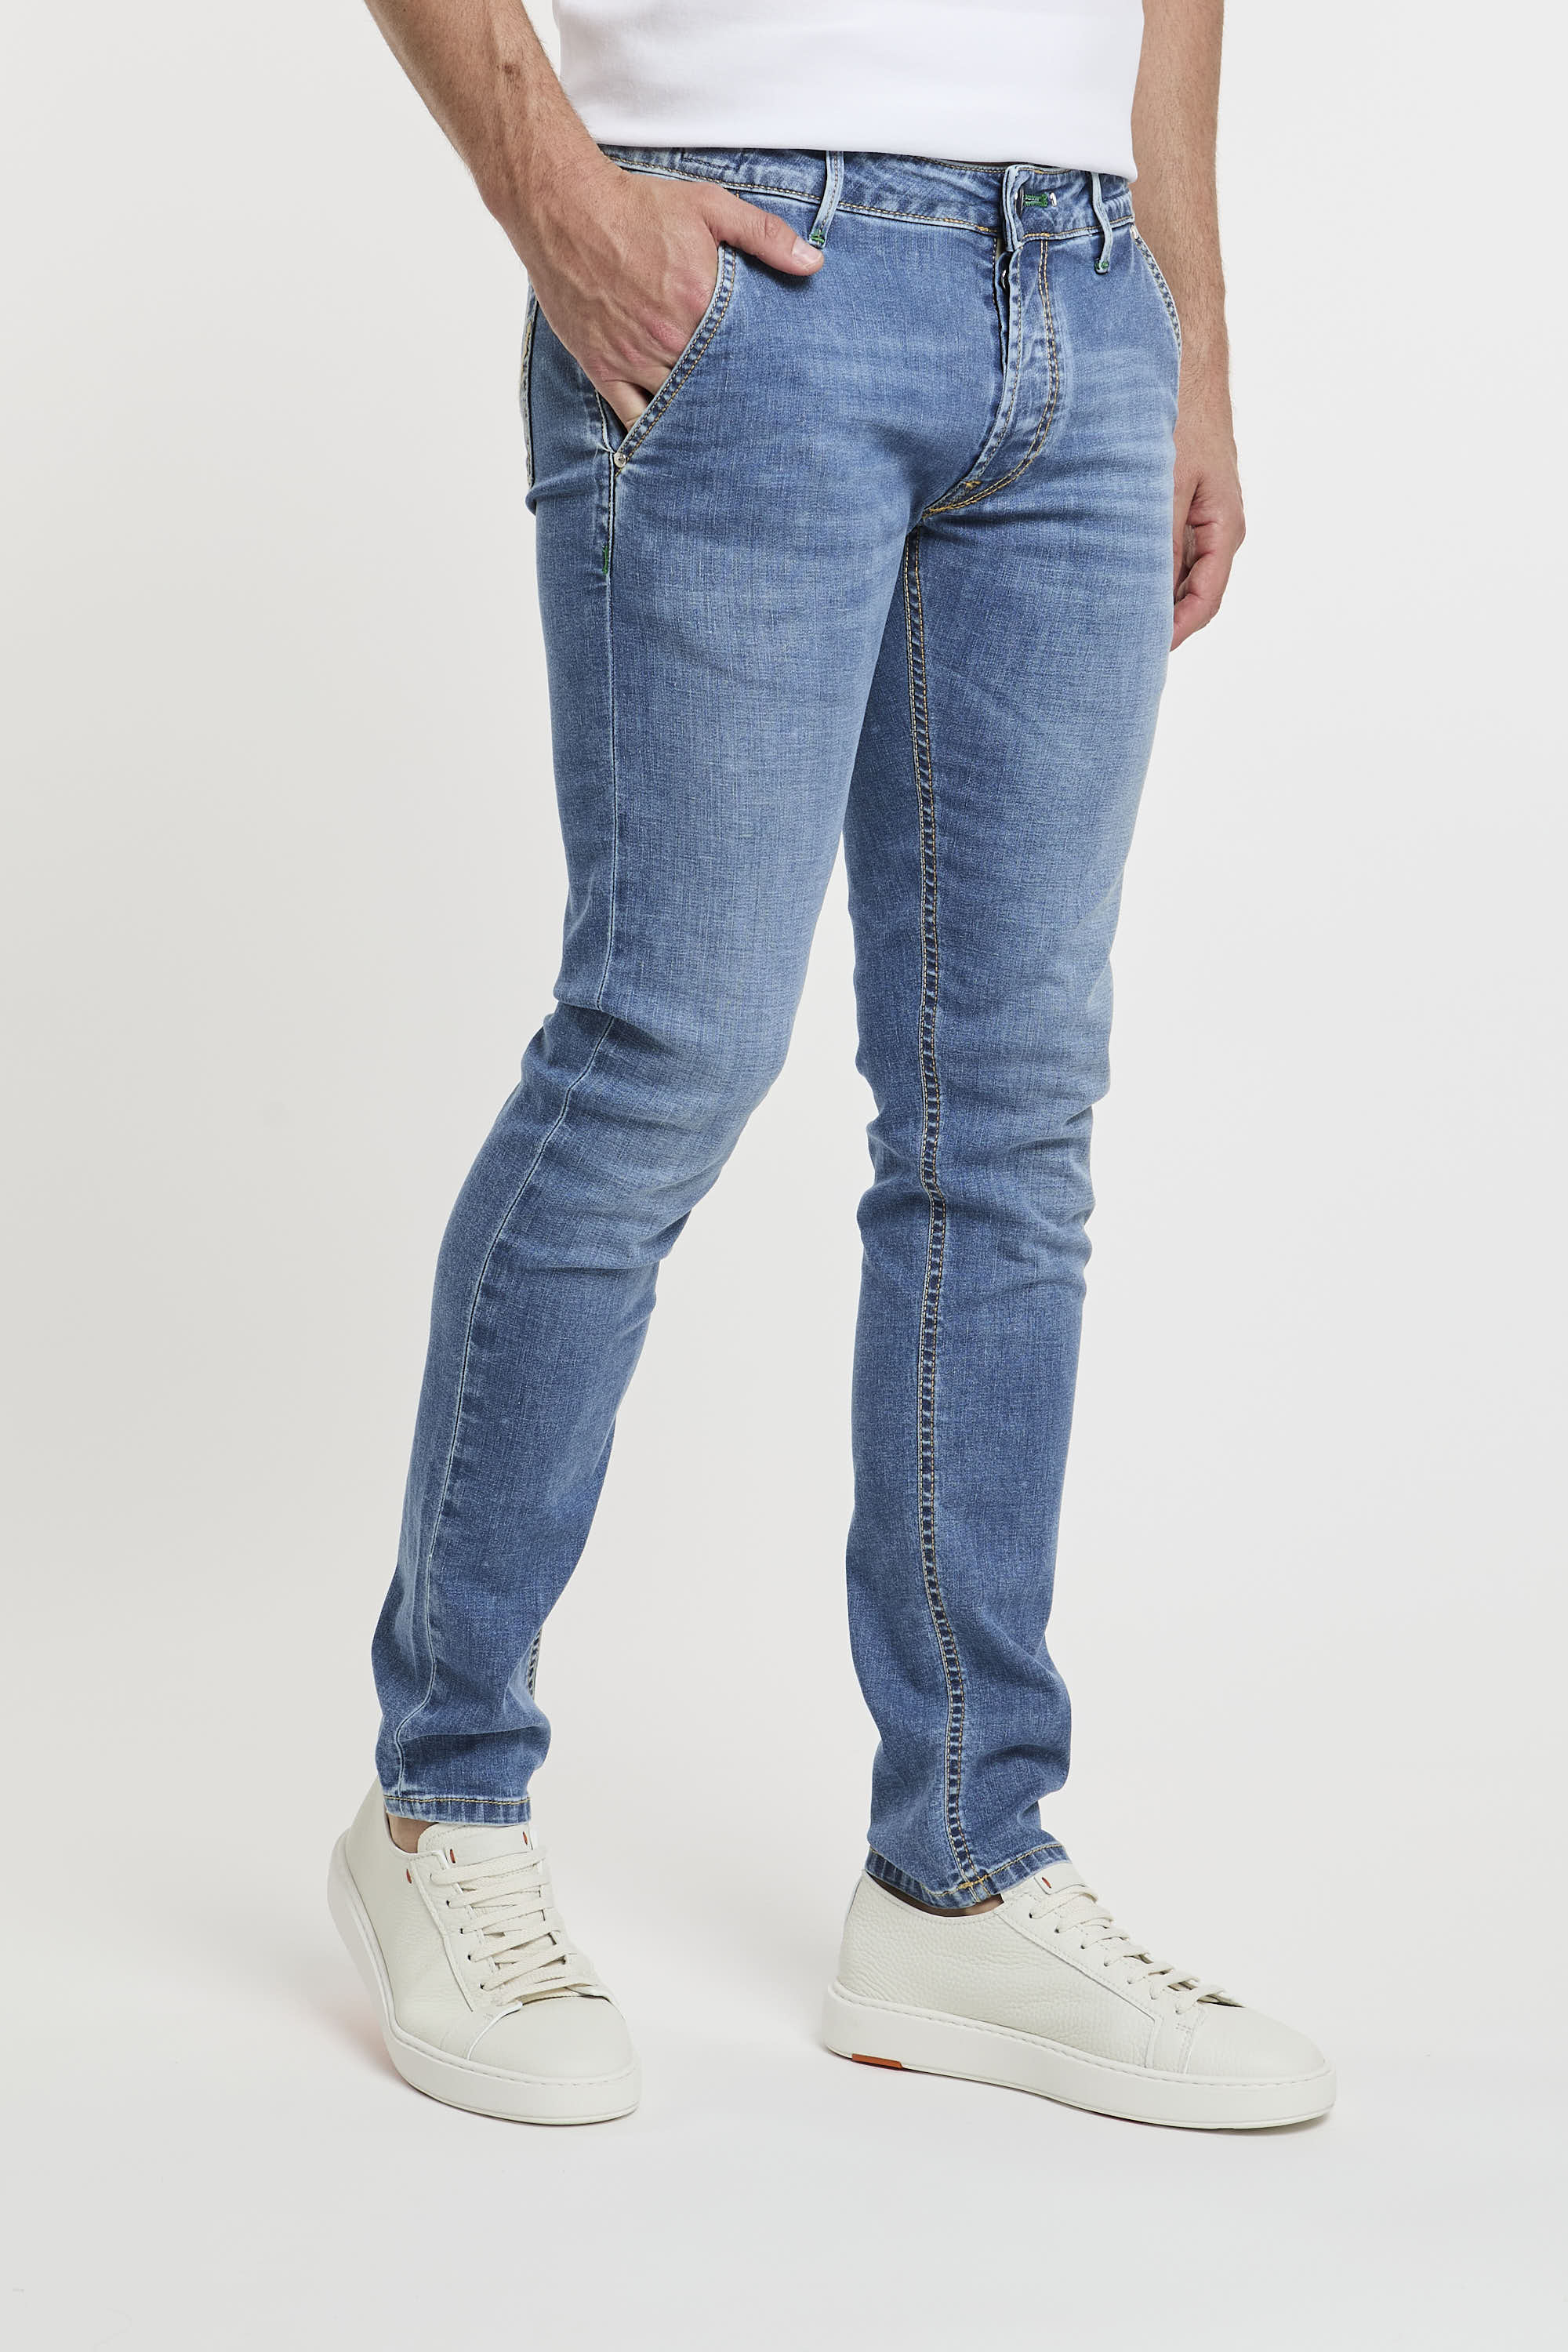 Handpicked Jeans Parma in Cotton Denim-3